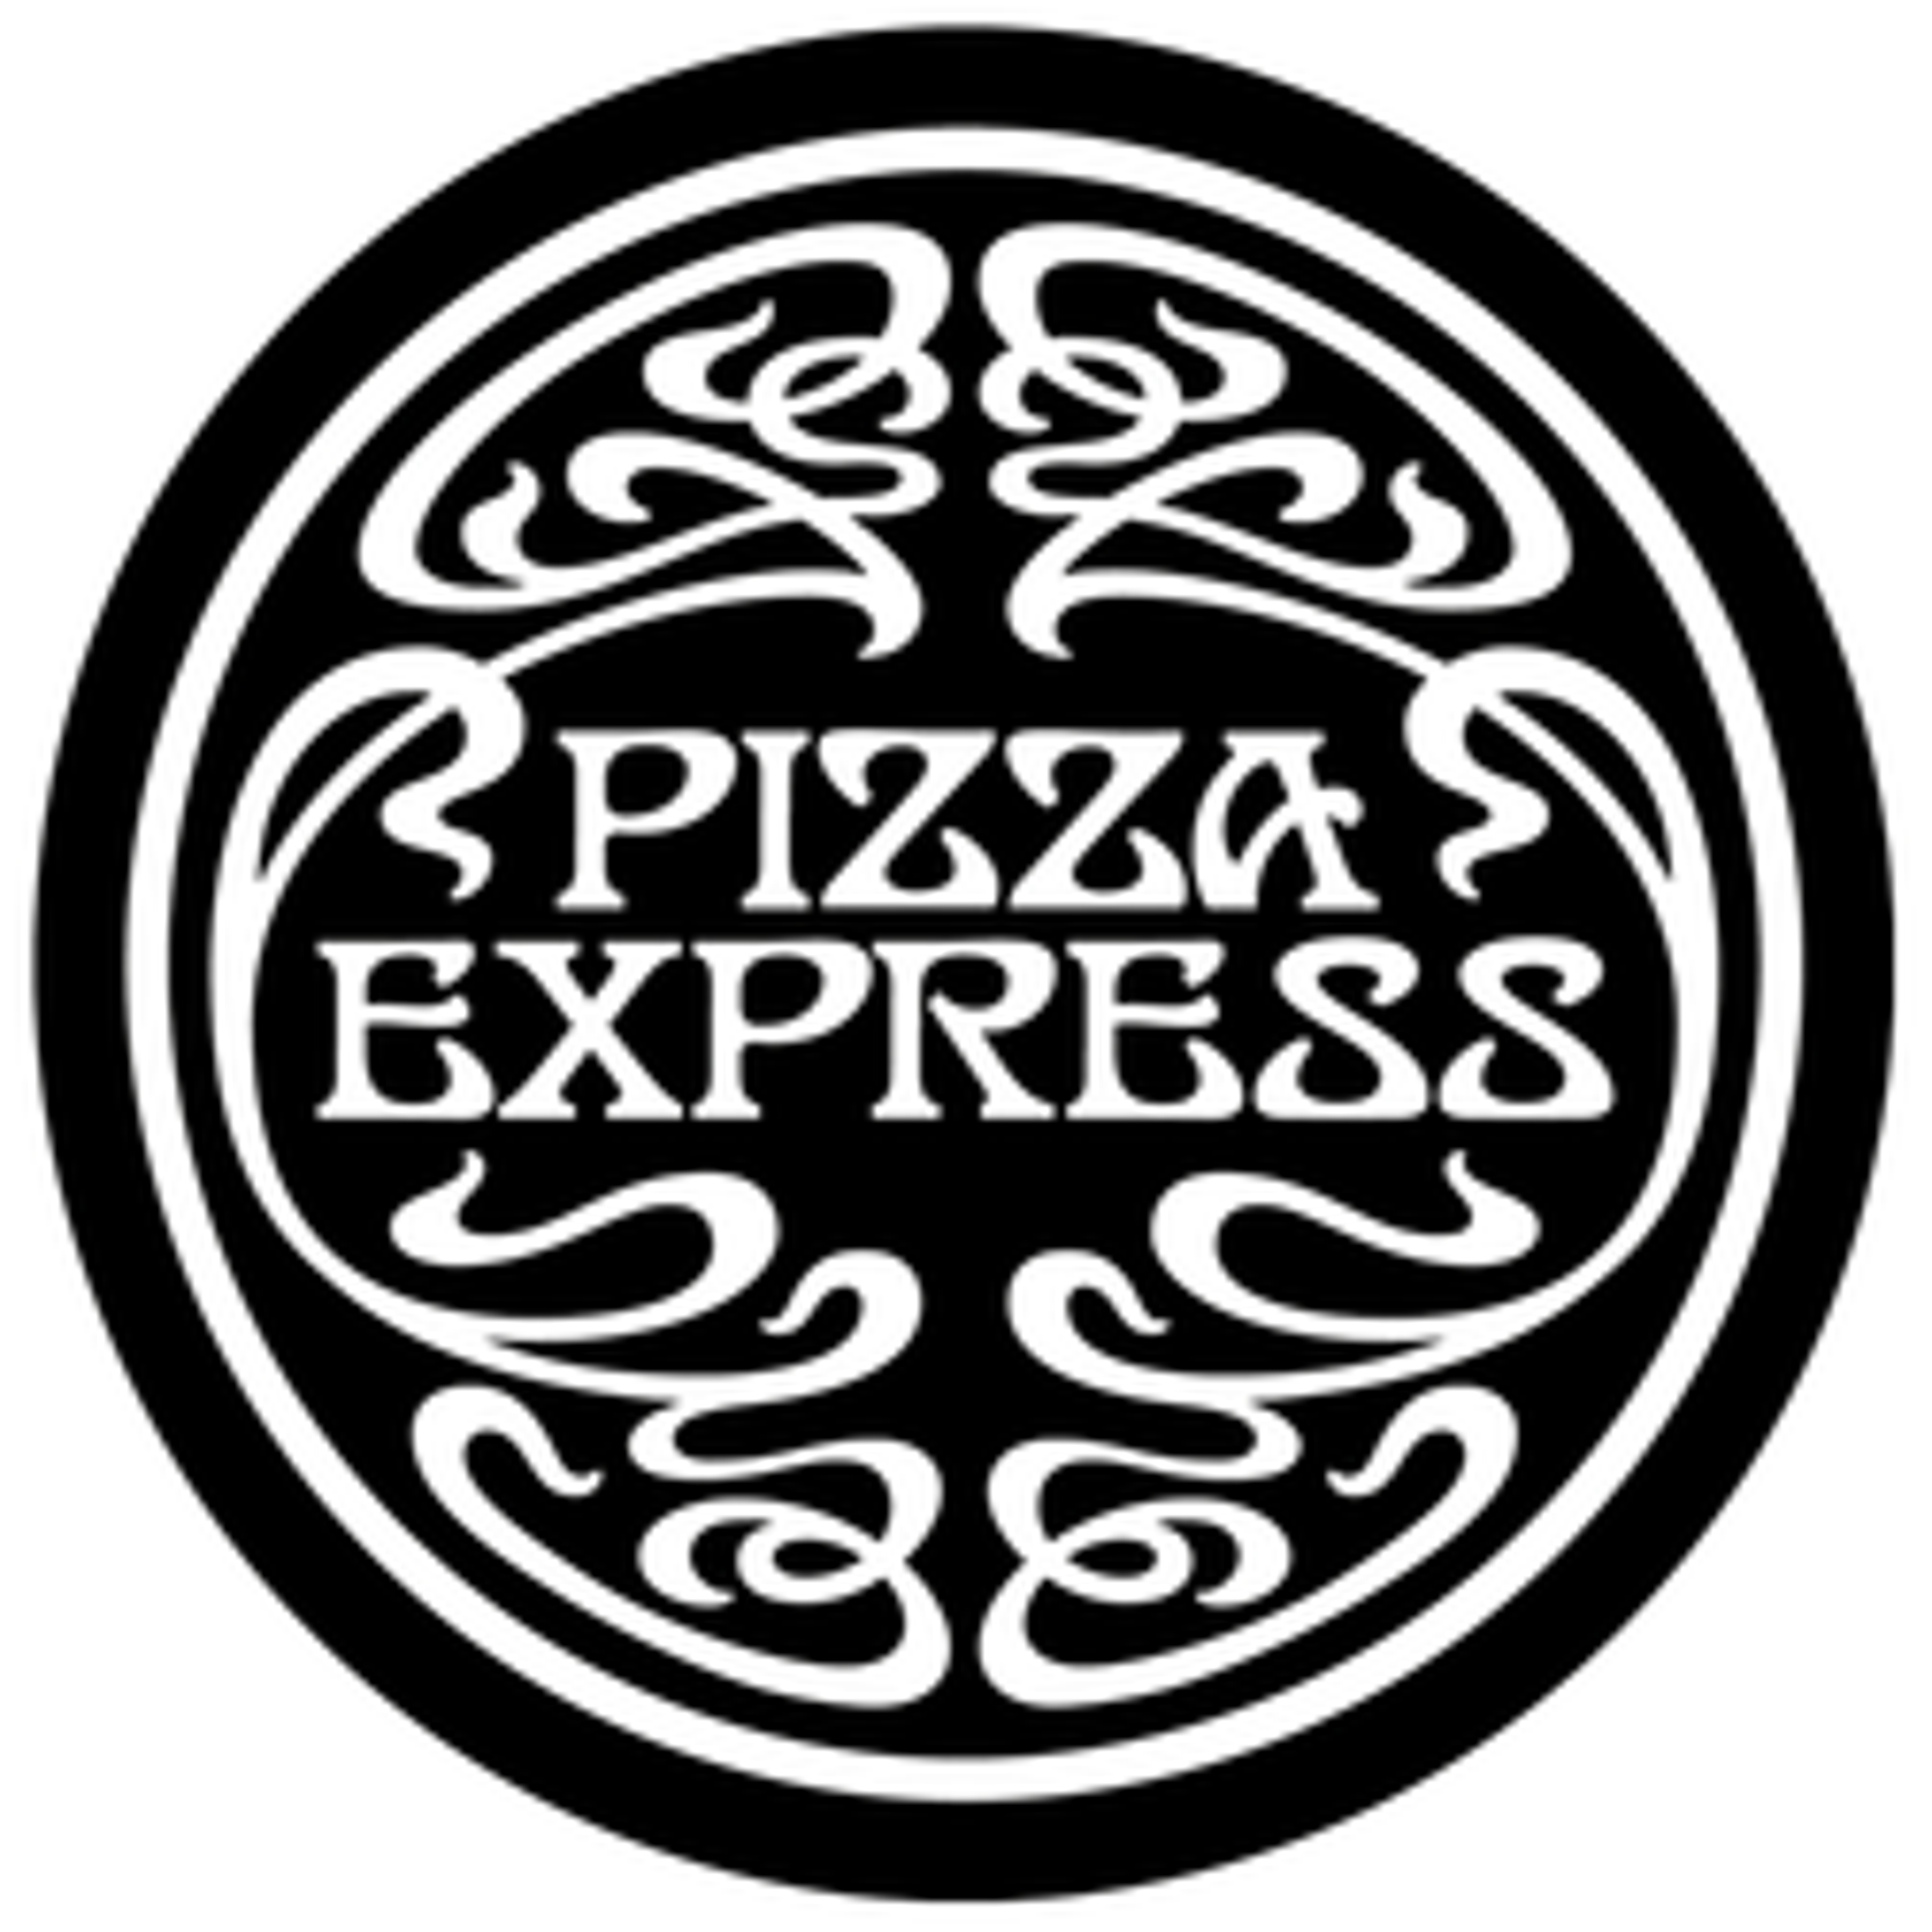  Pizza Express 